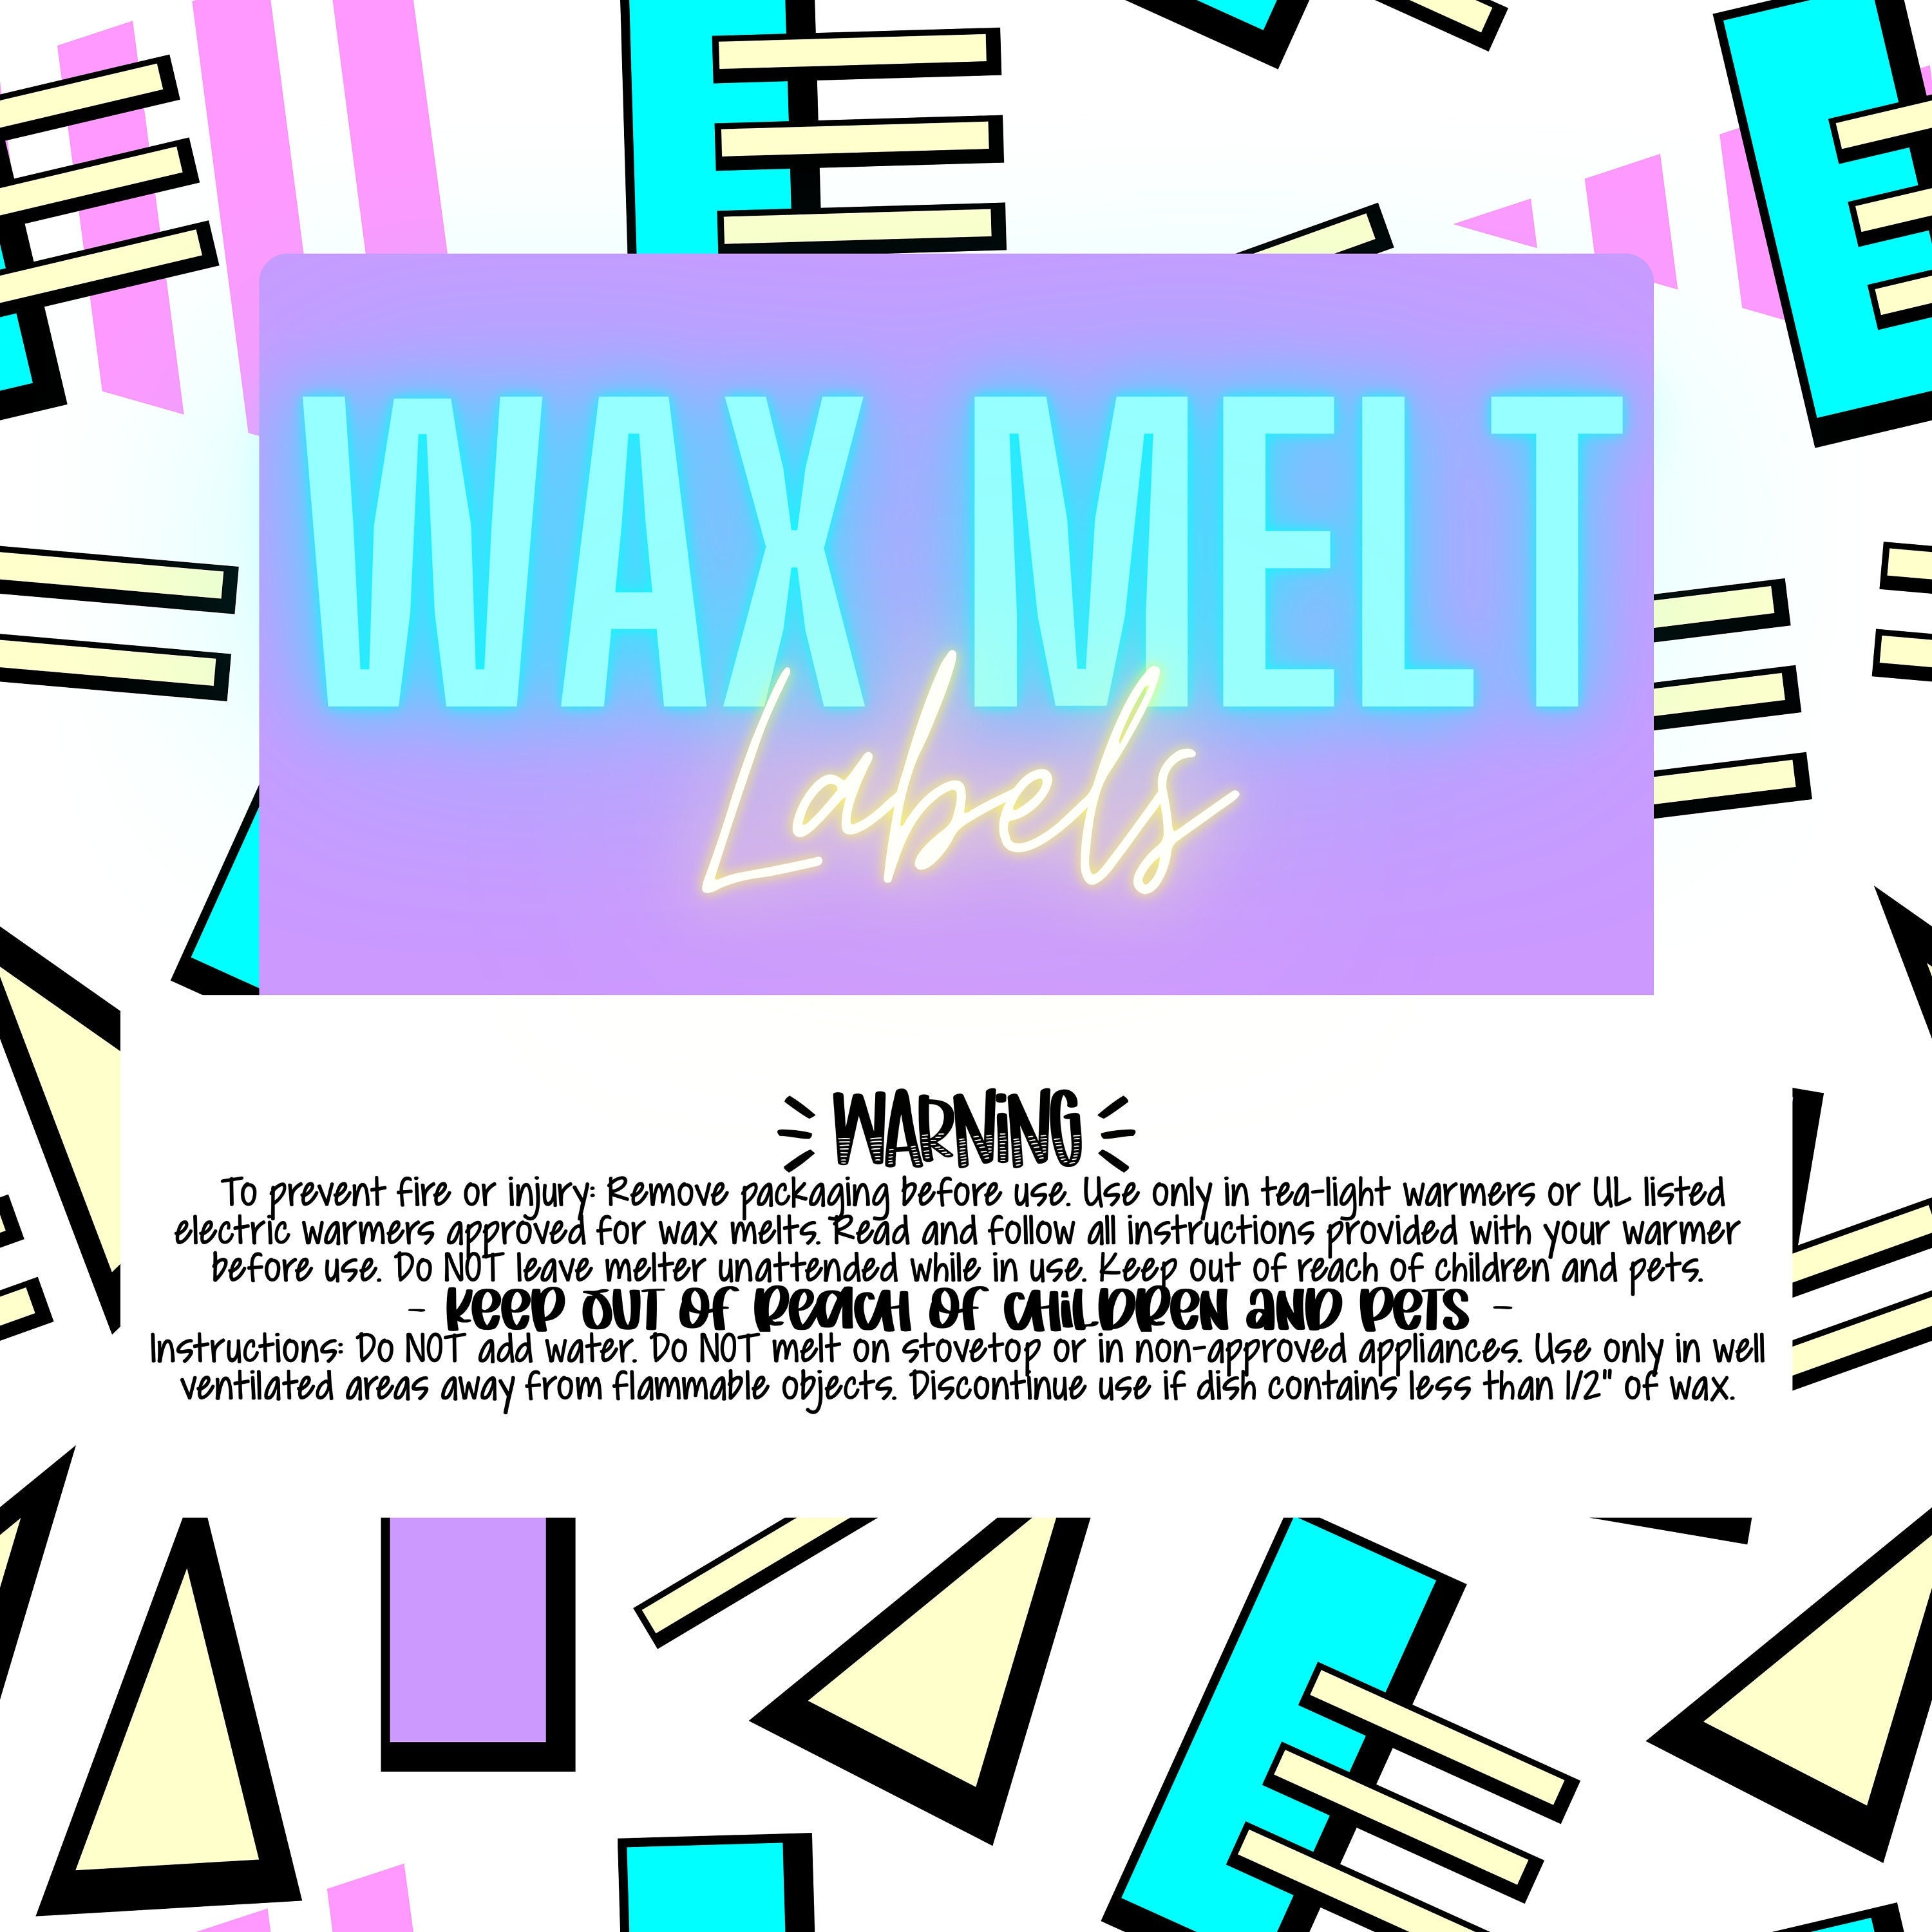 Wax Melt Warning Labels – natolliecreations